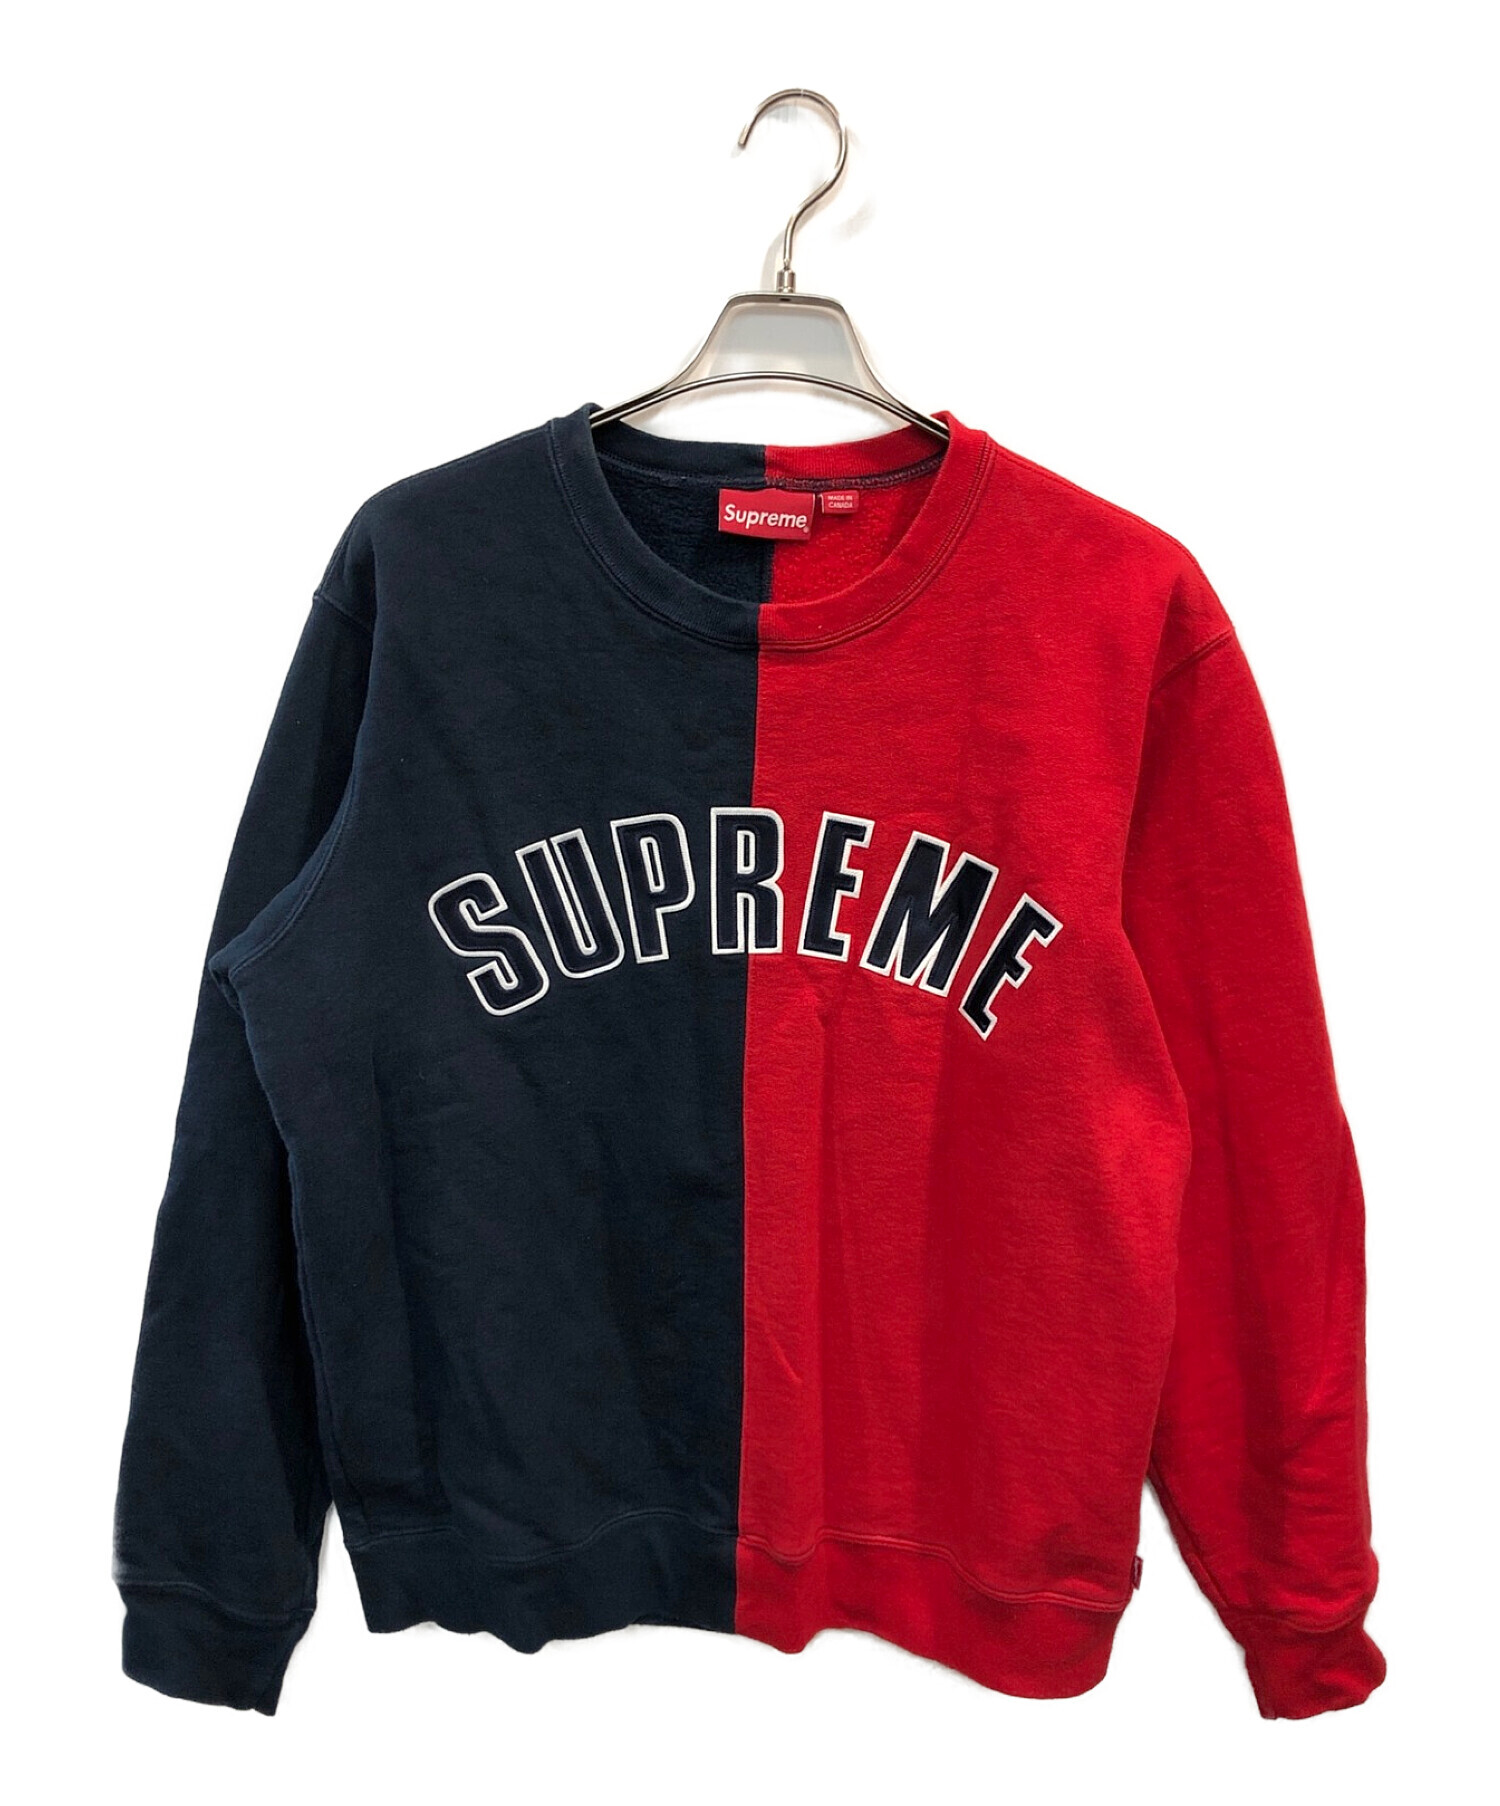 supreme split crew neck sweatshirt Mサイズ